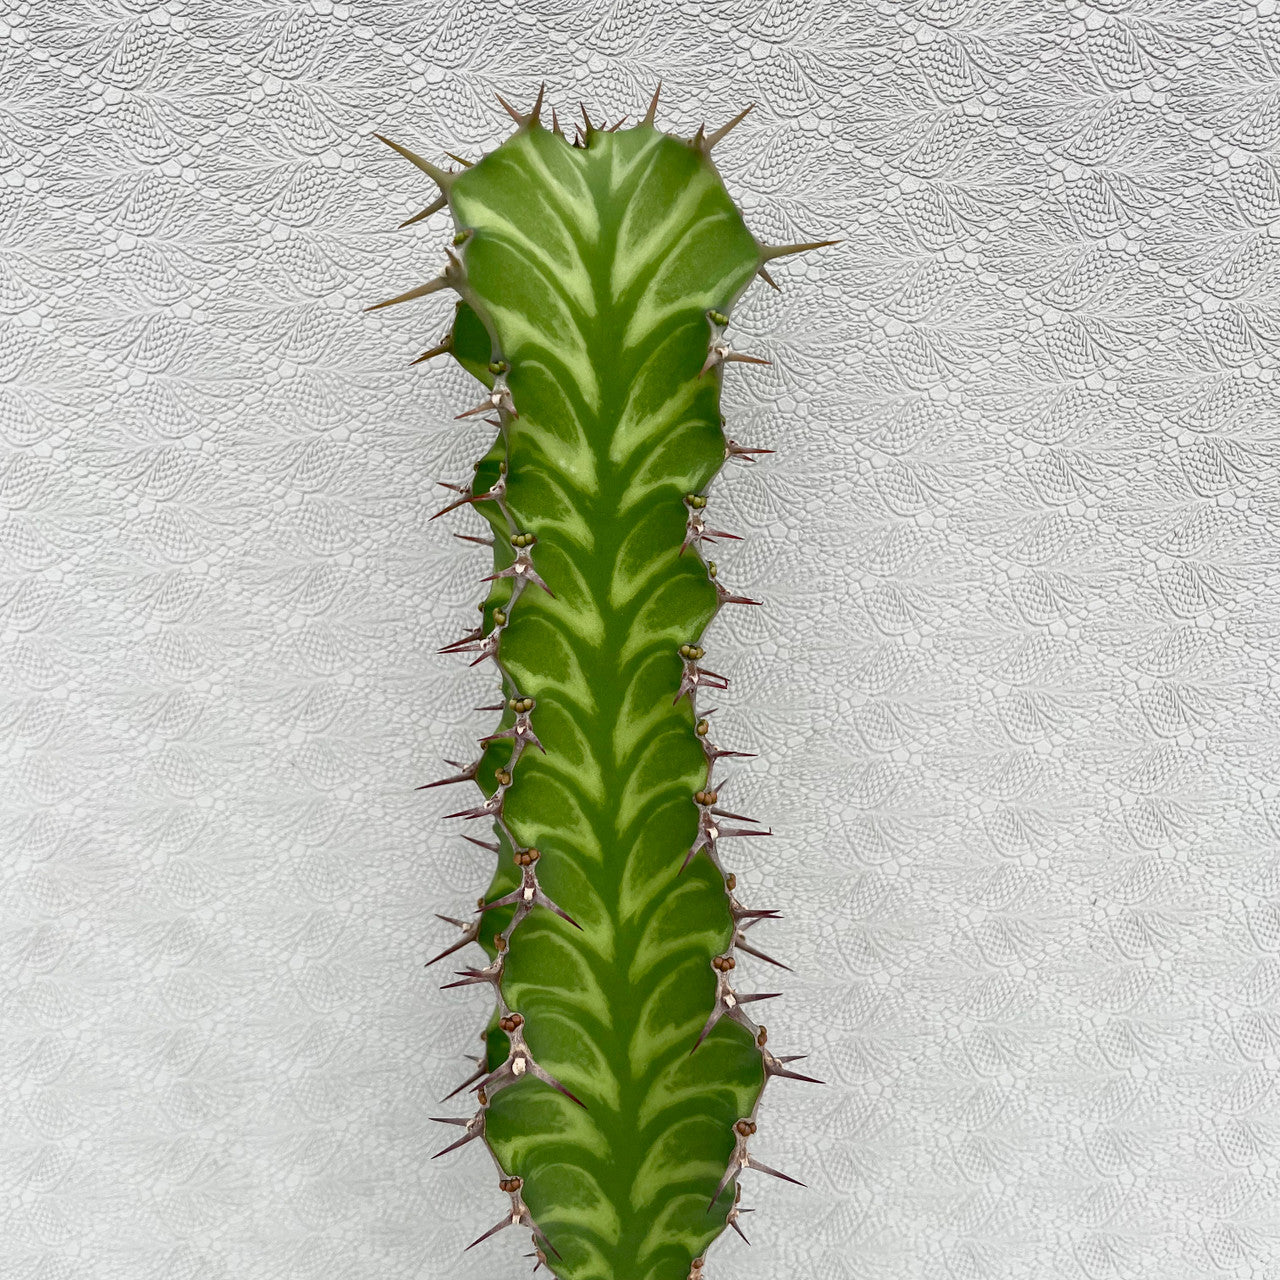 A Single Euphorbia Pseudocactus cutting up close showing detail